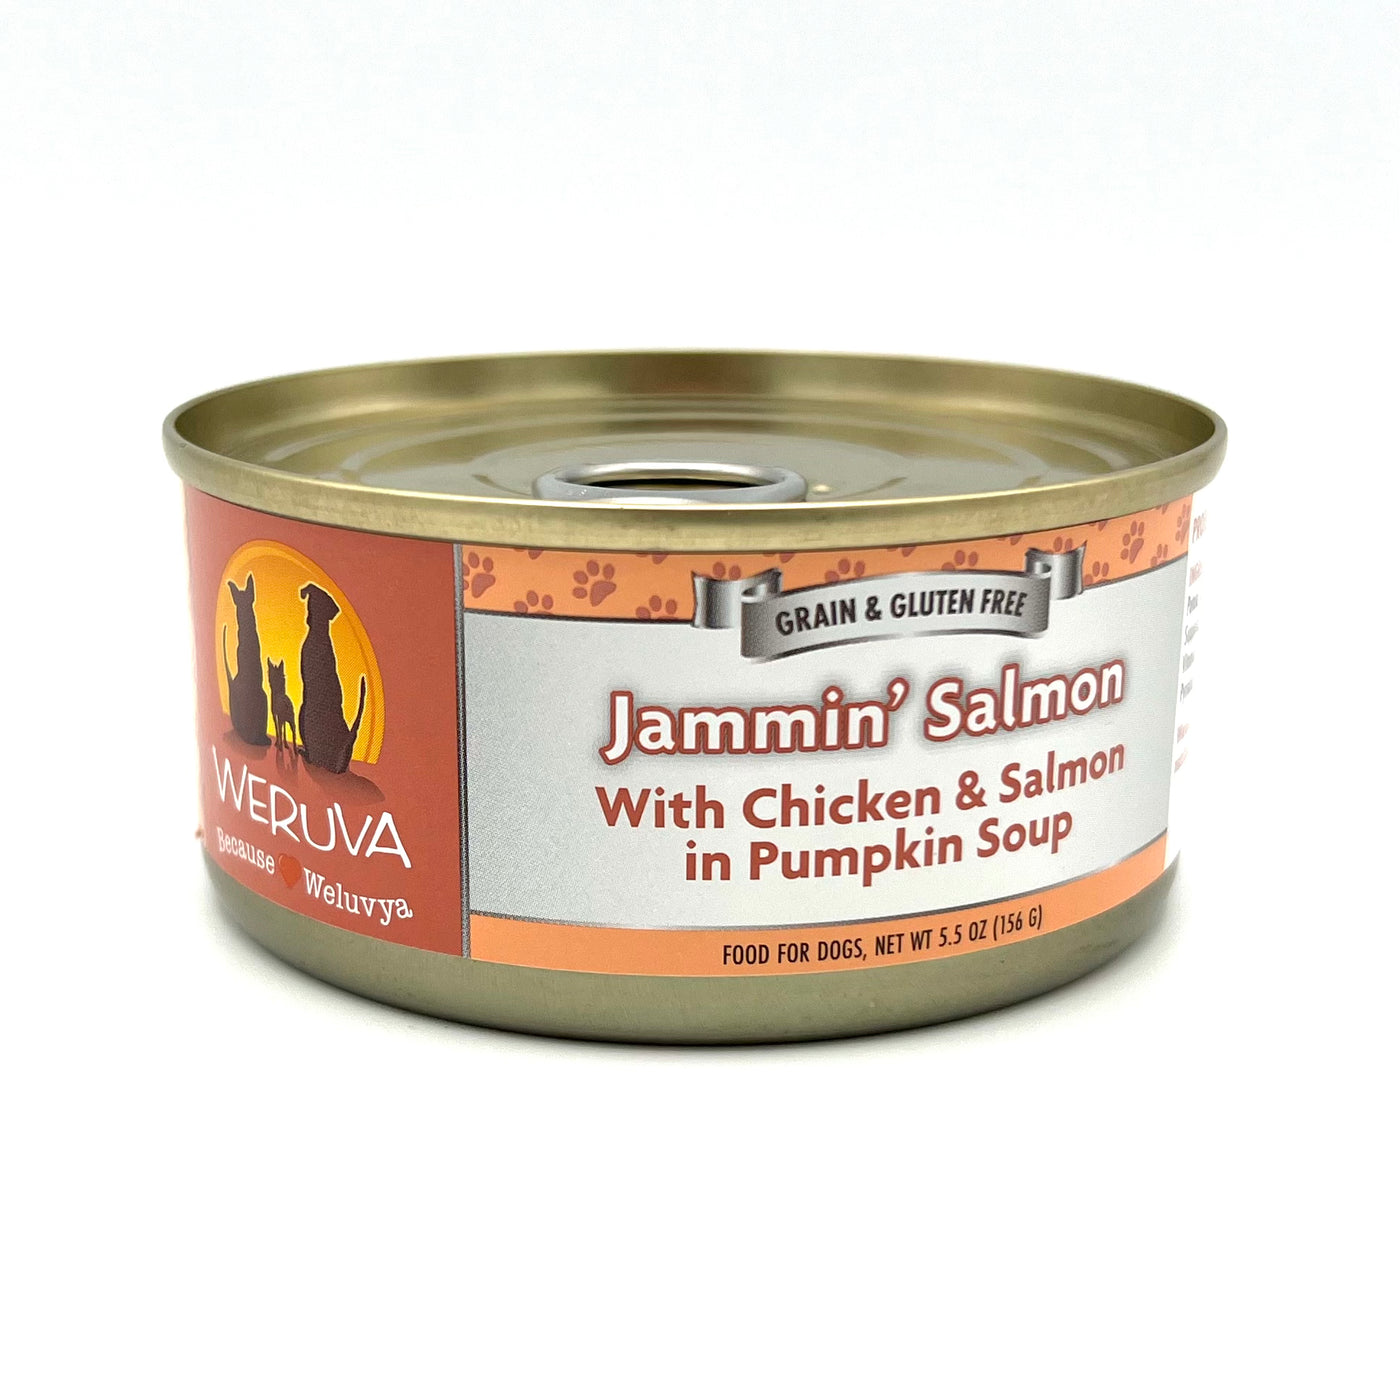 Weruva Jammin' Salmon with Chicken & Salmon in Pumpkin Soup Grain-Free Canned Dog Food 5.5 oz